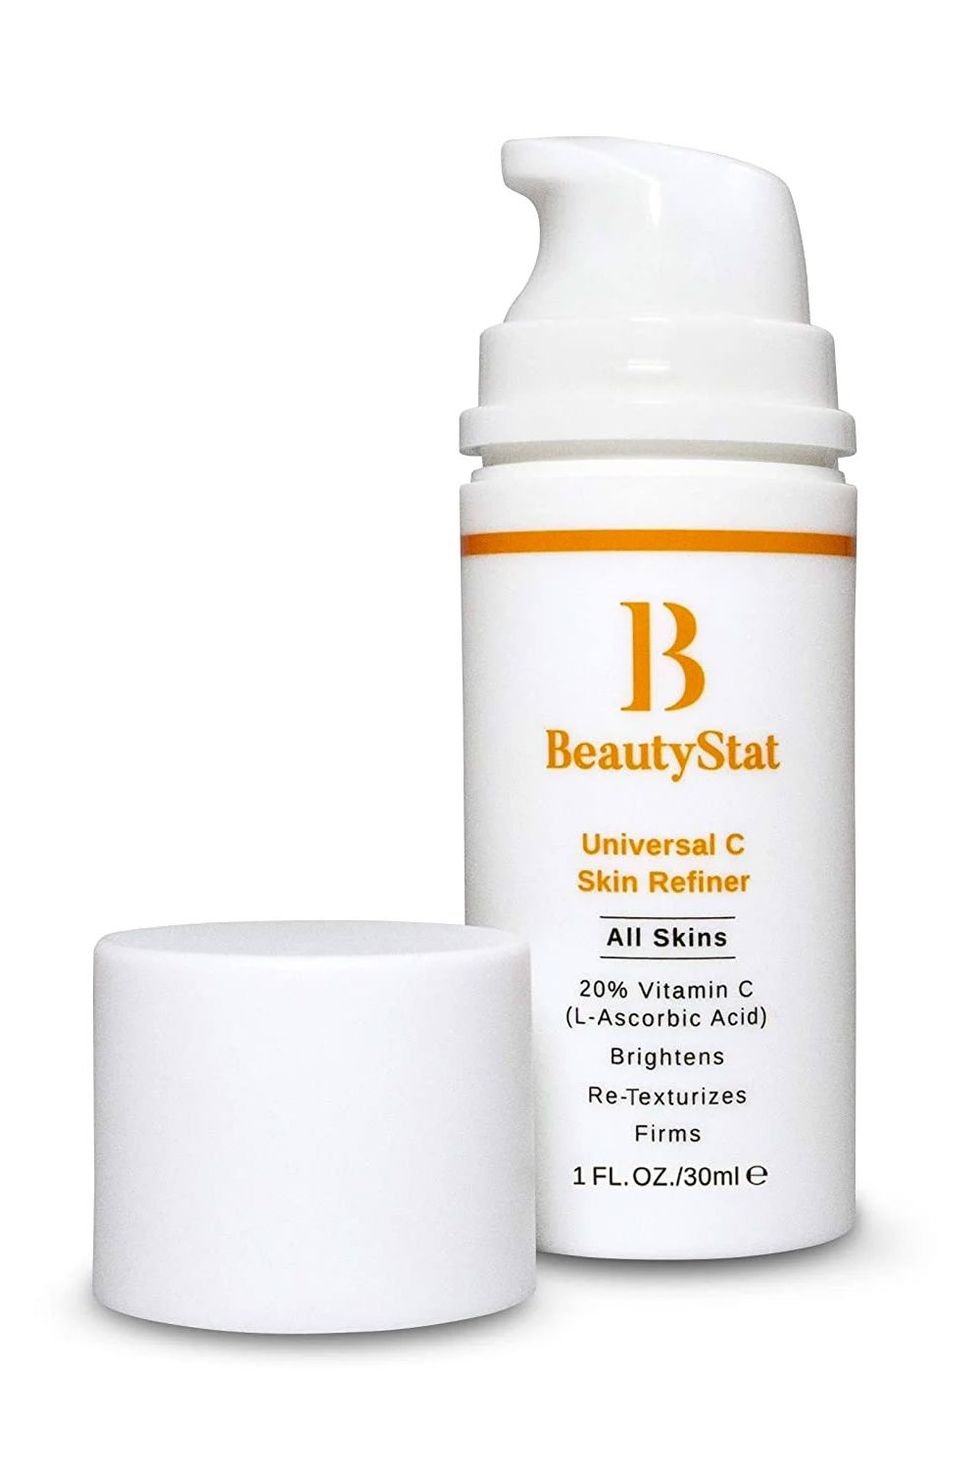 Beautystat Universal C Skin Refiner